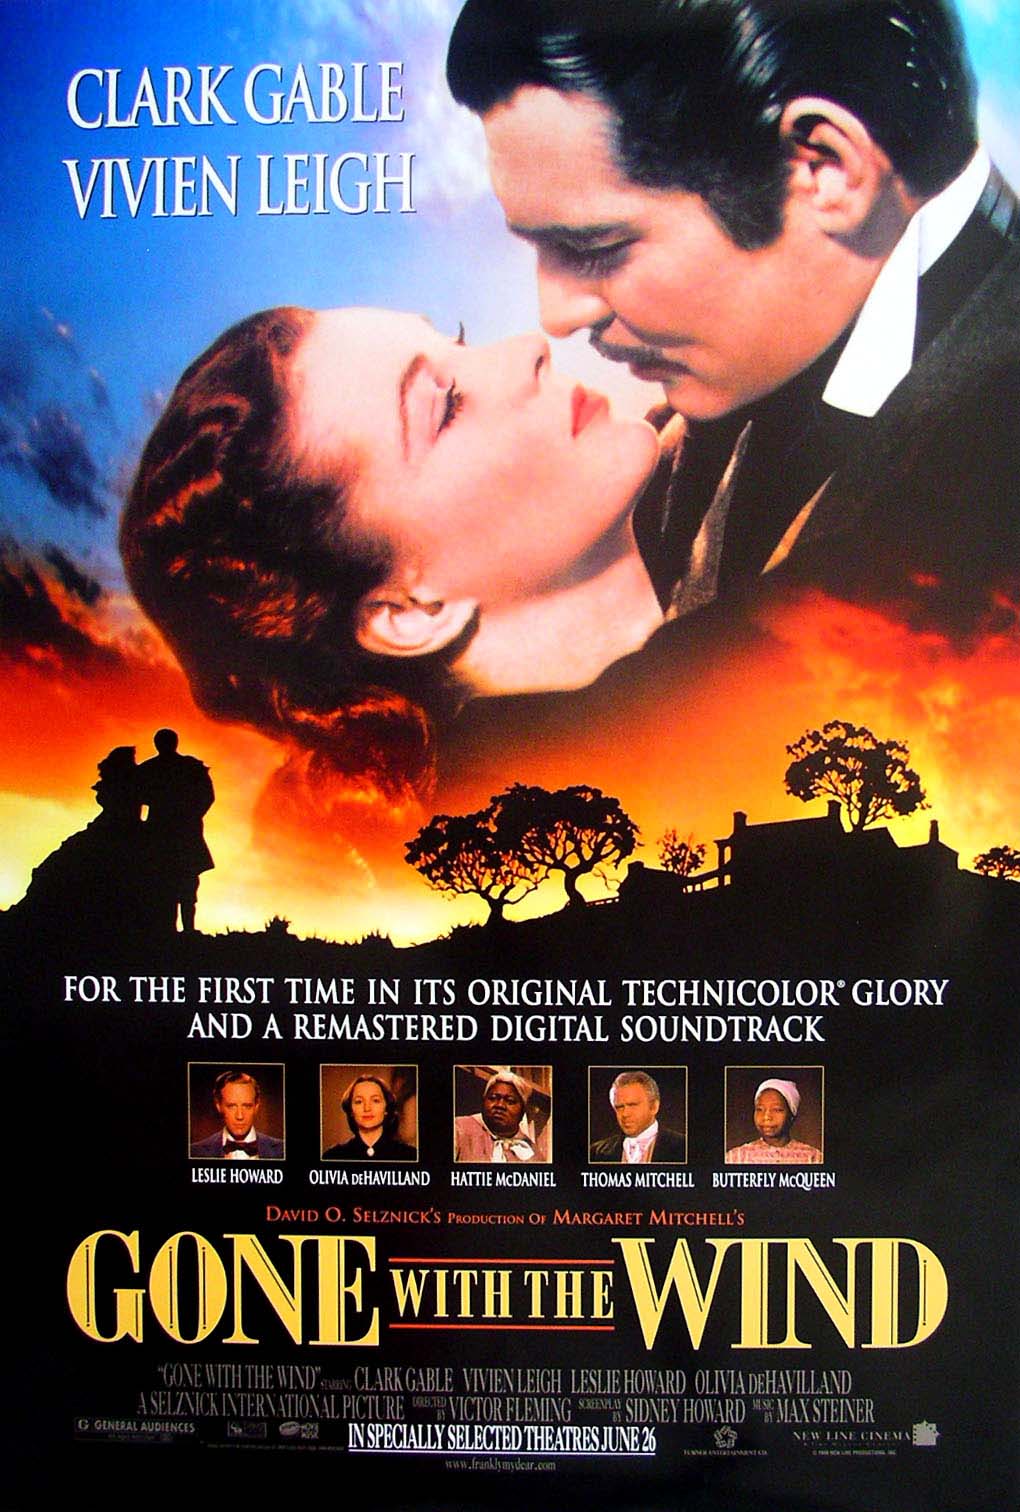 The Wind movie